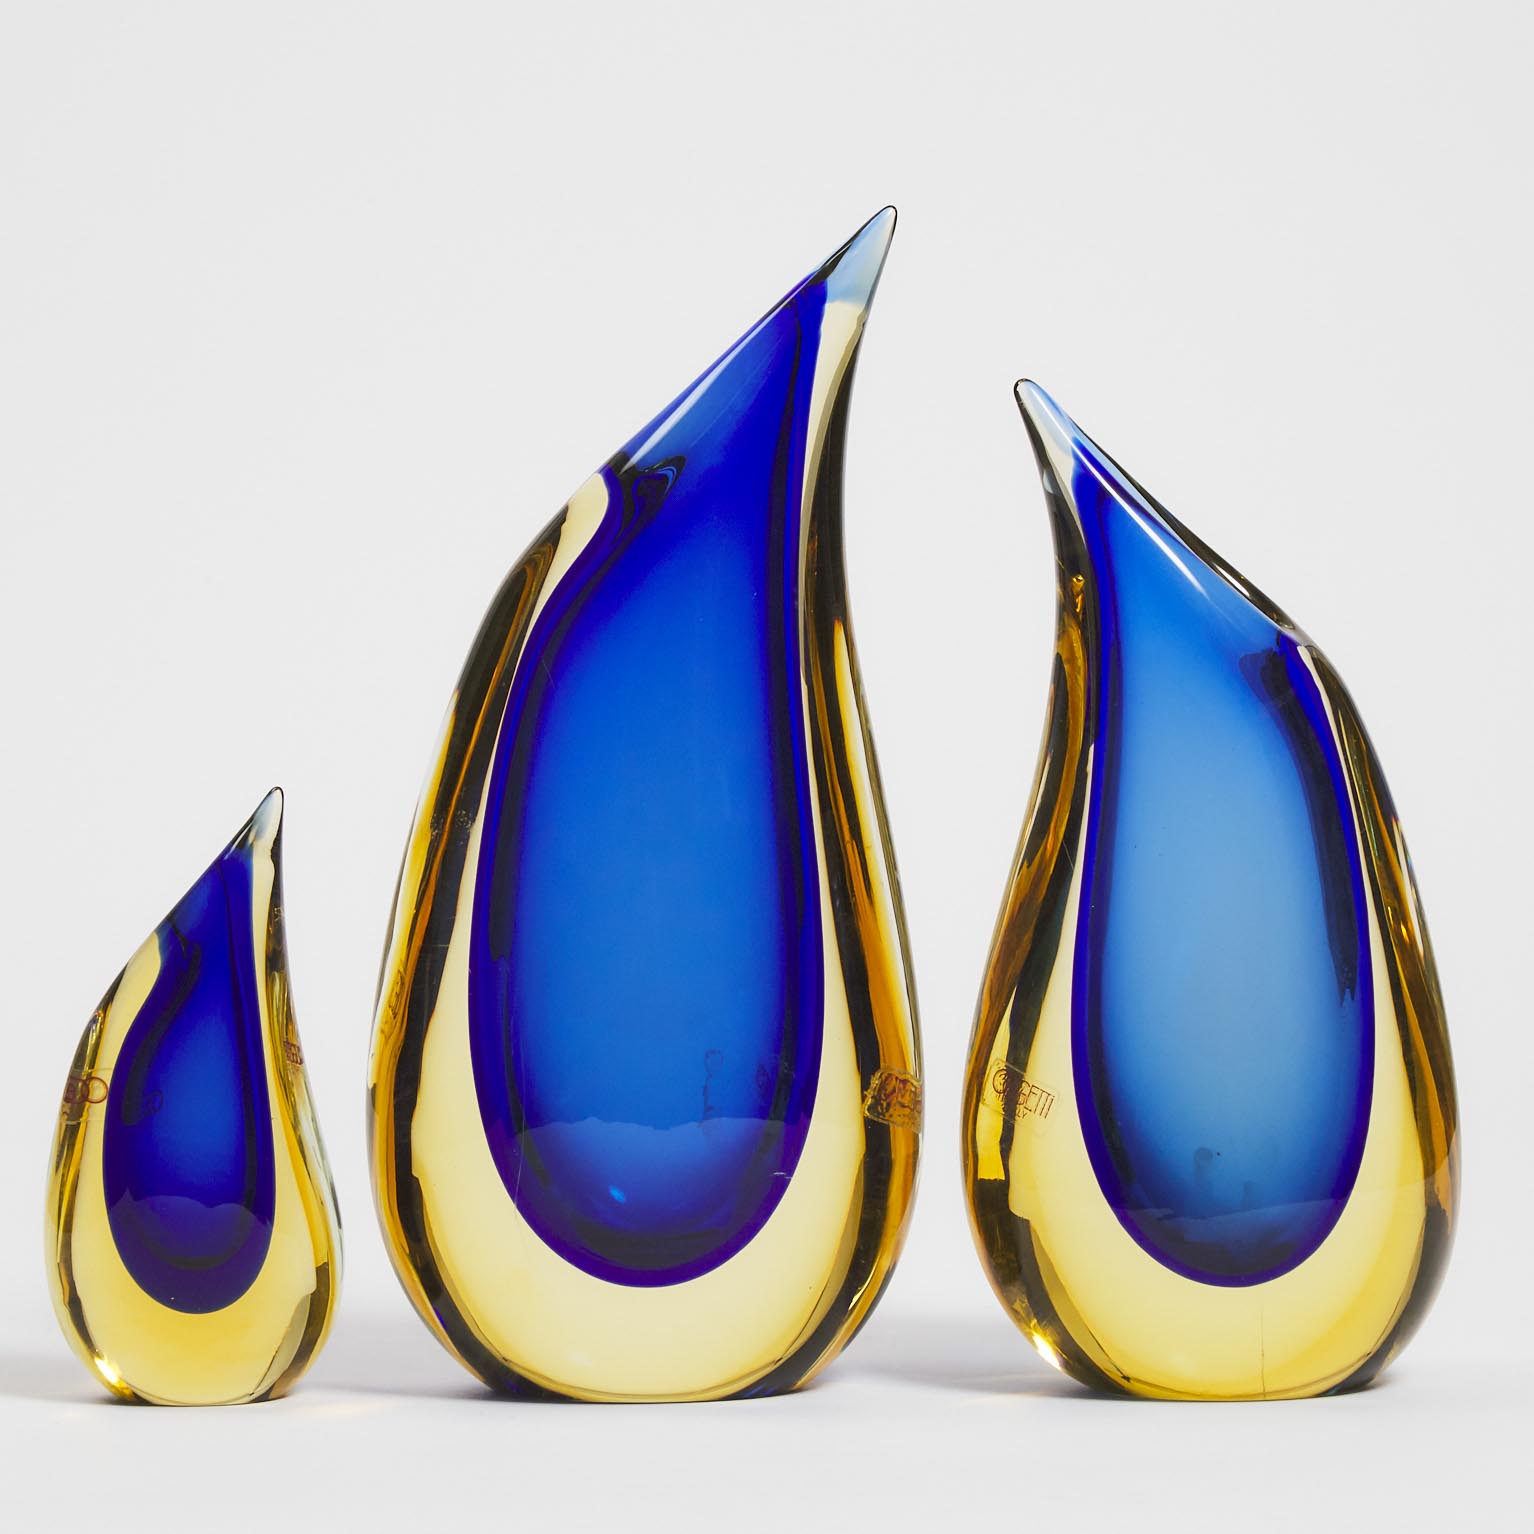 Group of Three Murano Sommerso Glass Vases, Luigi Onesto for Oggetti, 20th century